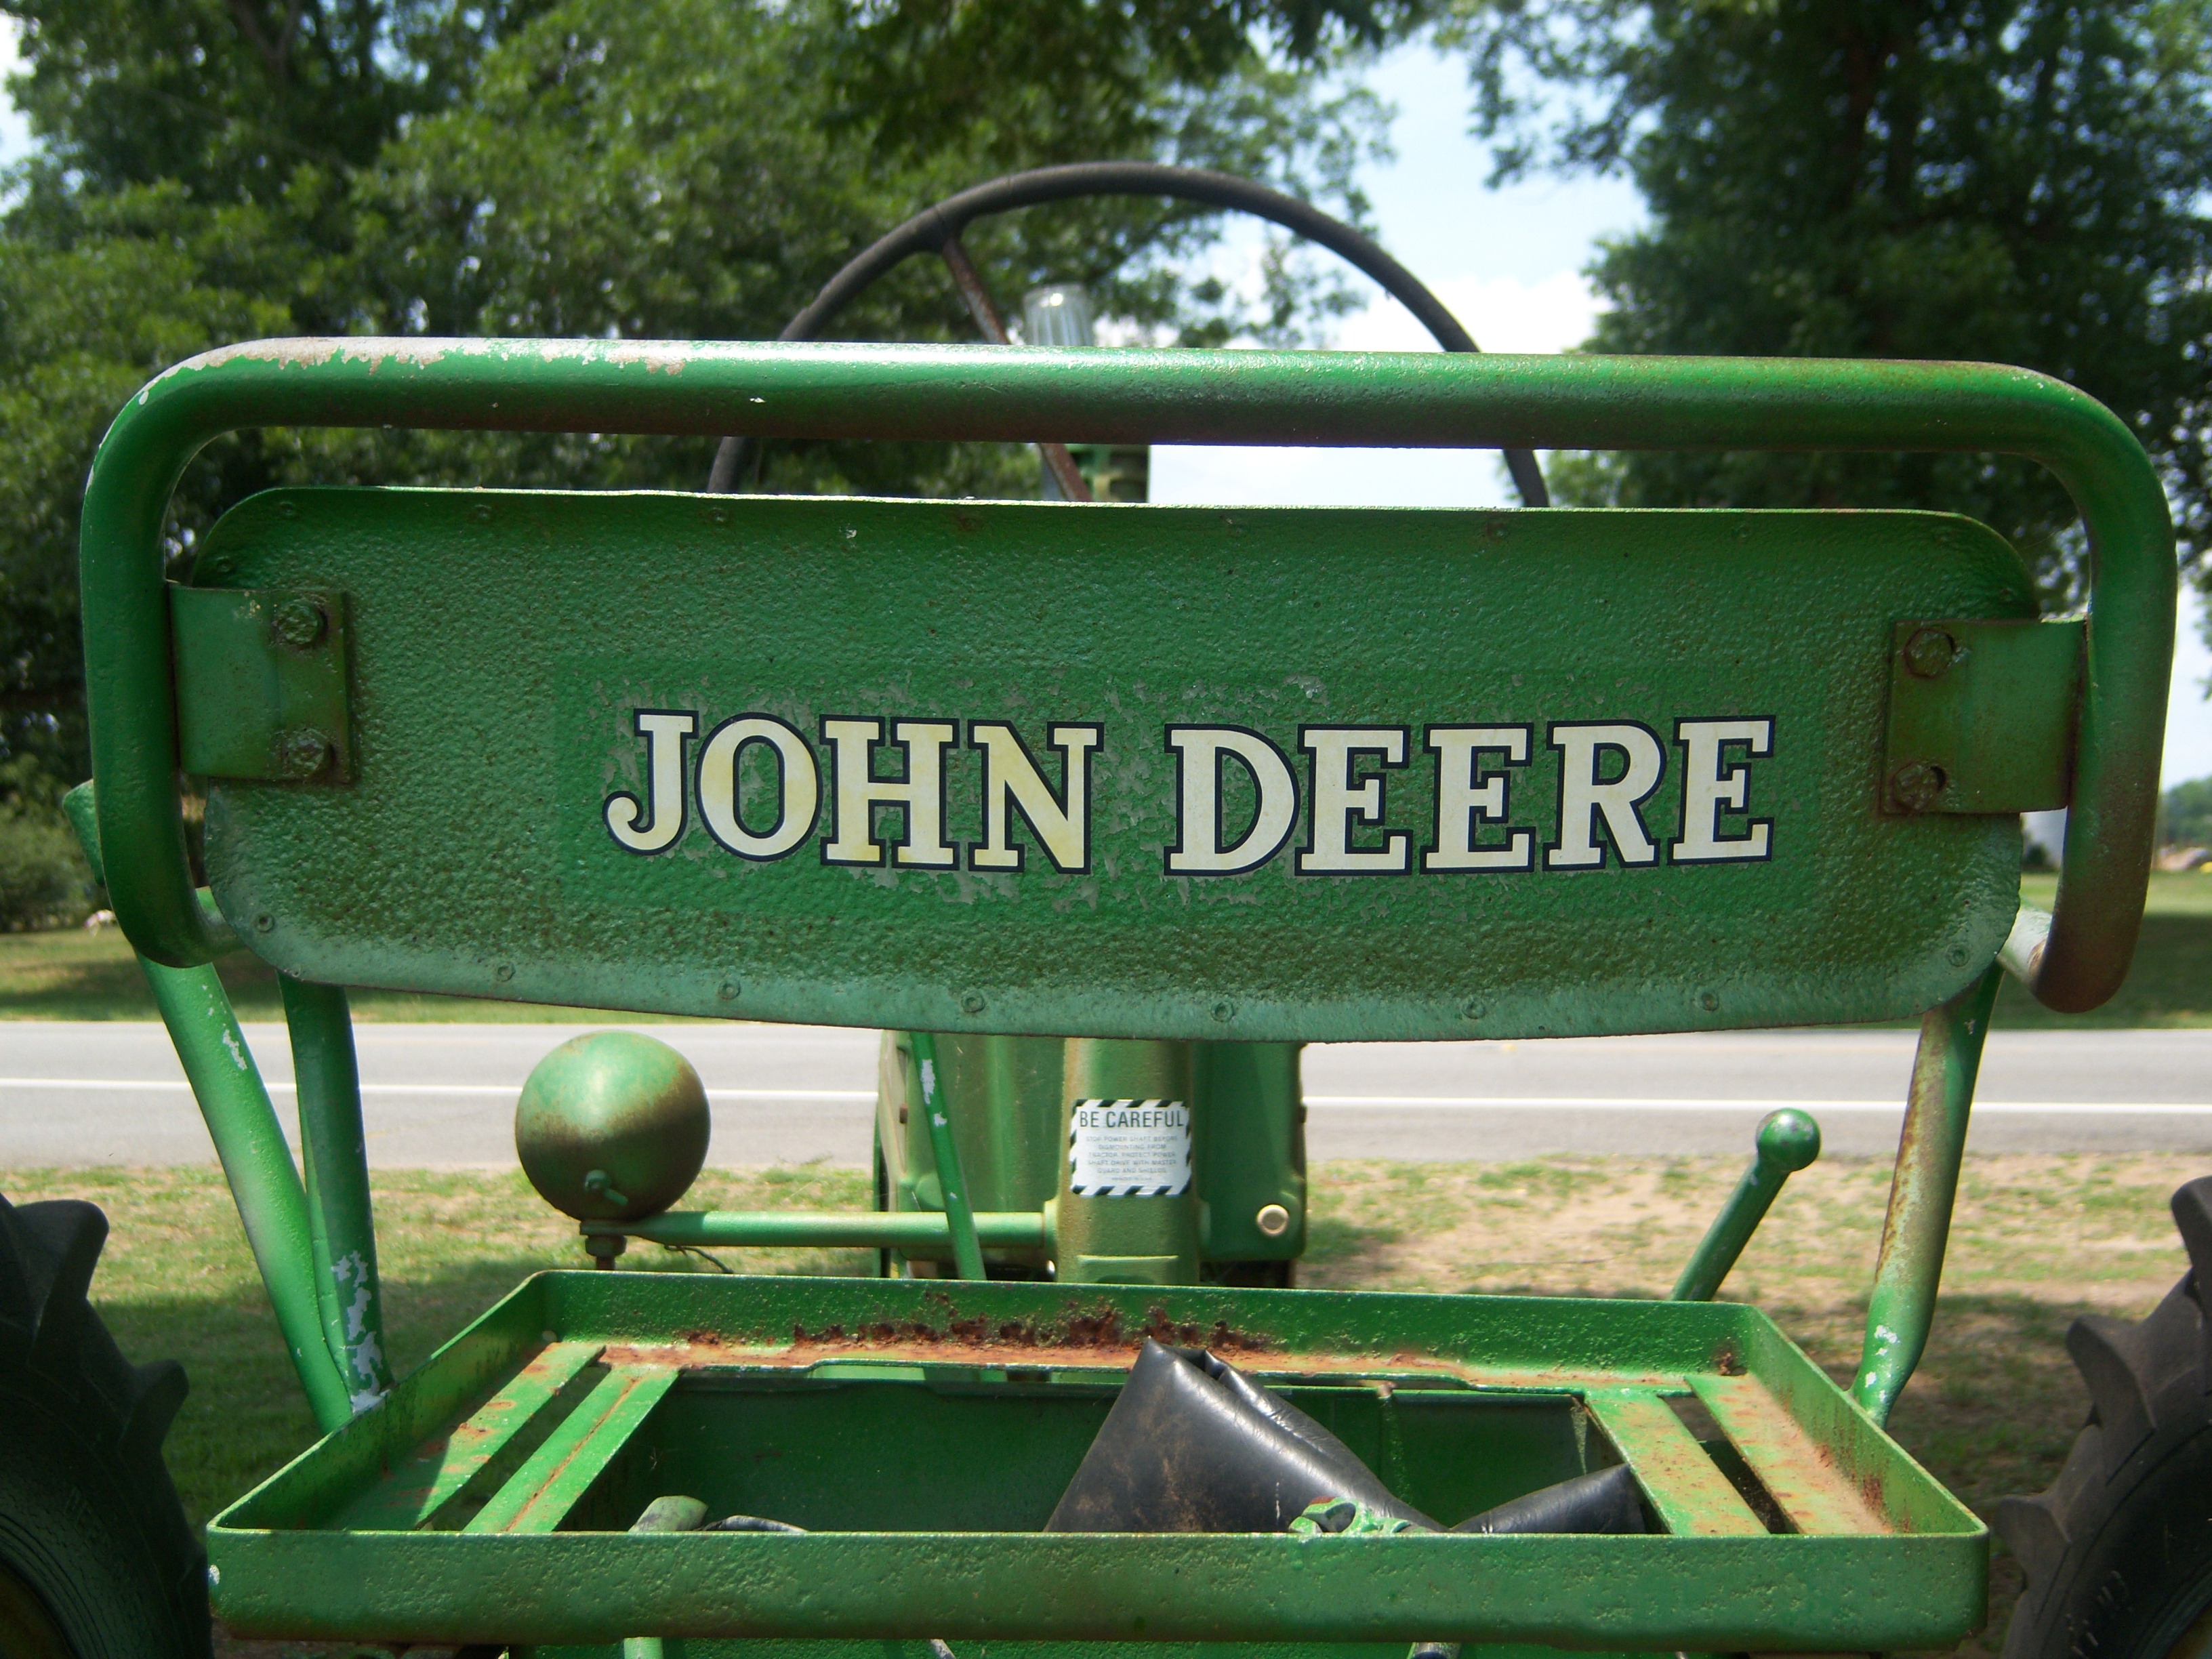 John Deere product